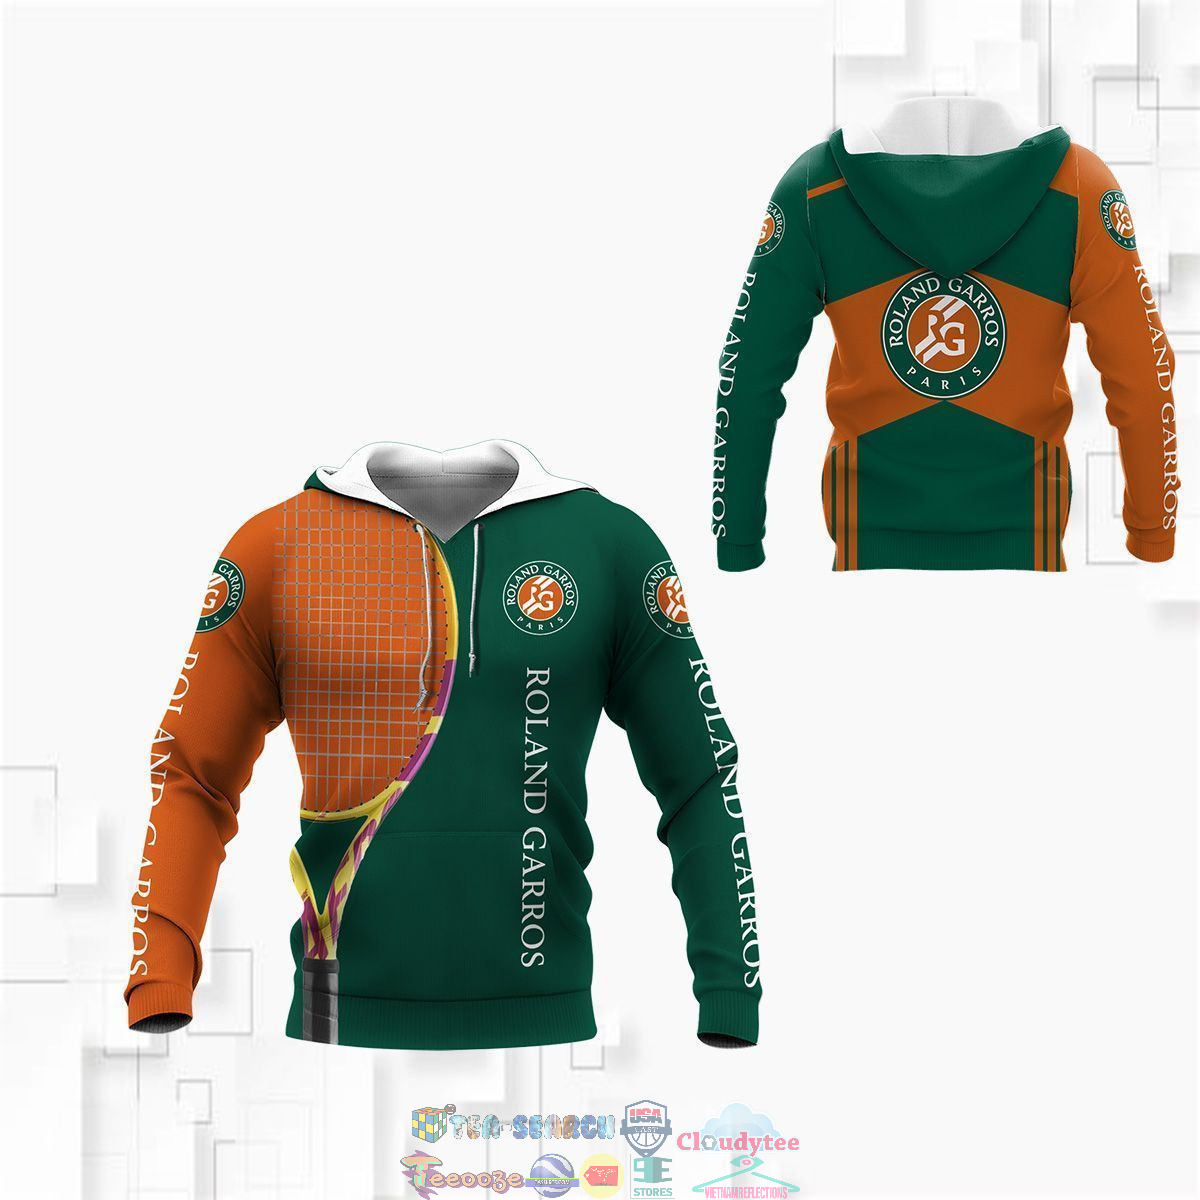 Roland-Garros ver 1 3D hoodie and t-shirt- Saleoff